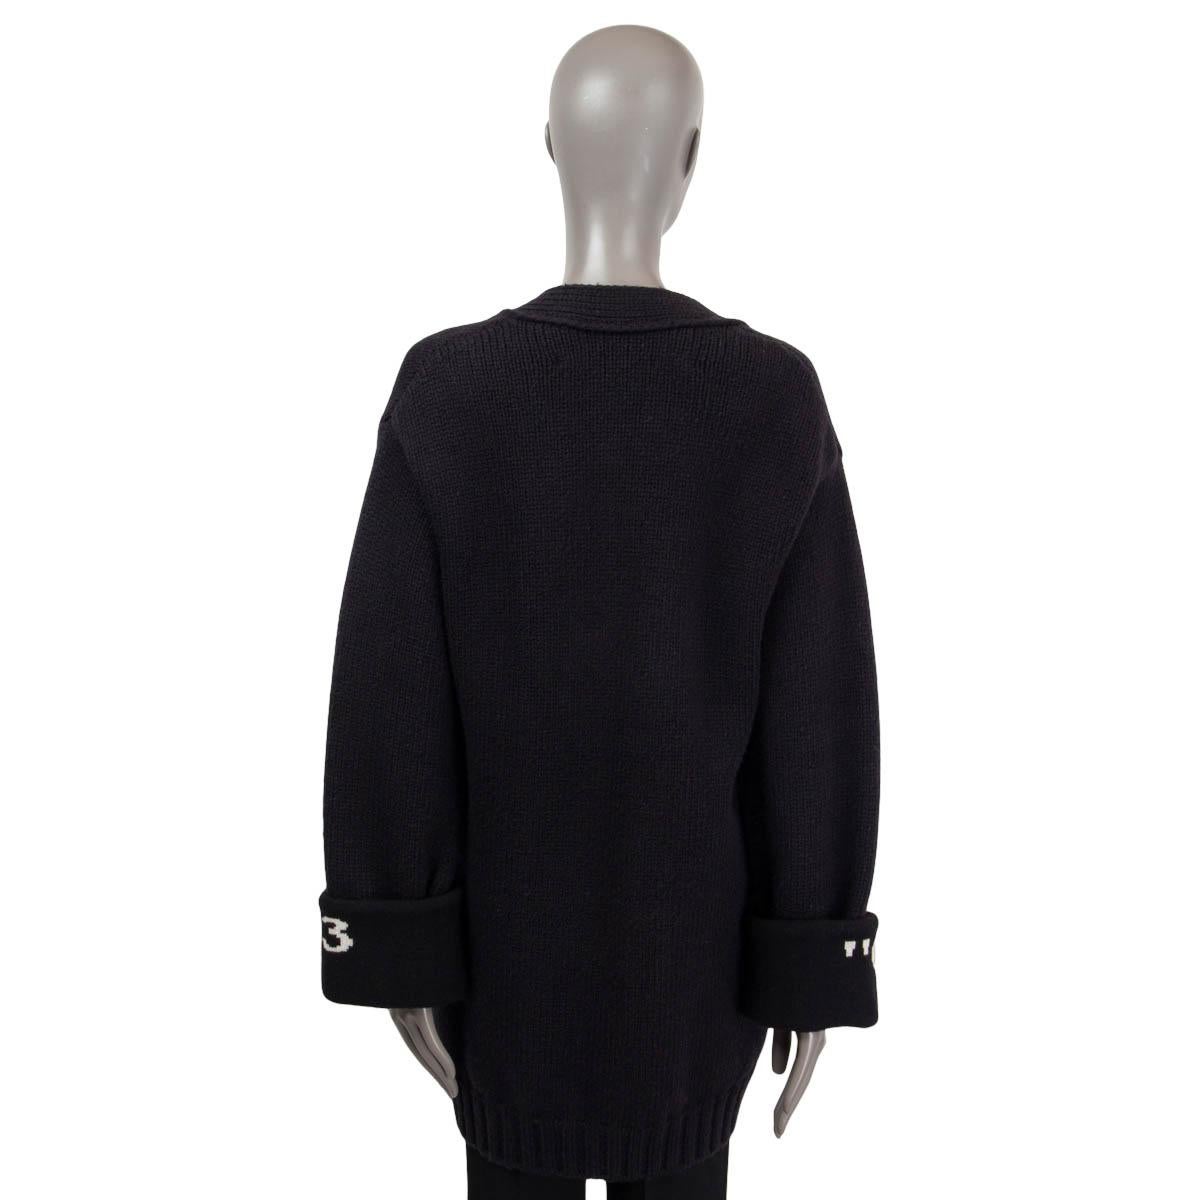 Black OFF-WHITE c/o VIRGIL ABLOH black wool 2013 POCKET Cardigan Sweater 40 M For Sale